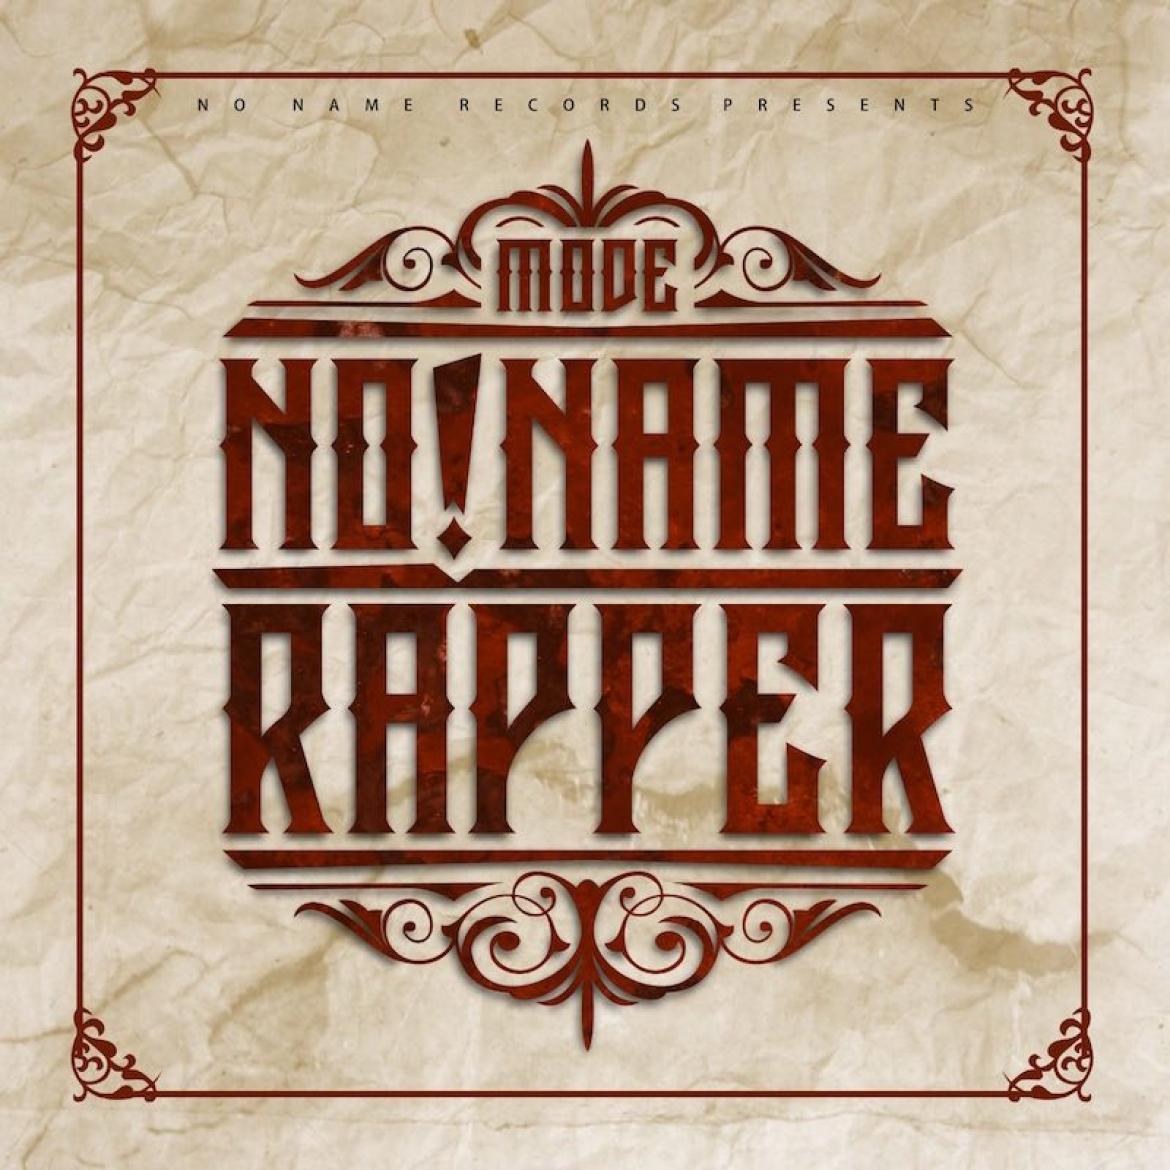 Albumcover "No Name Rapper"